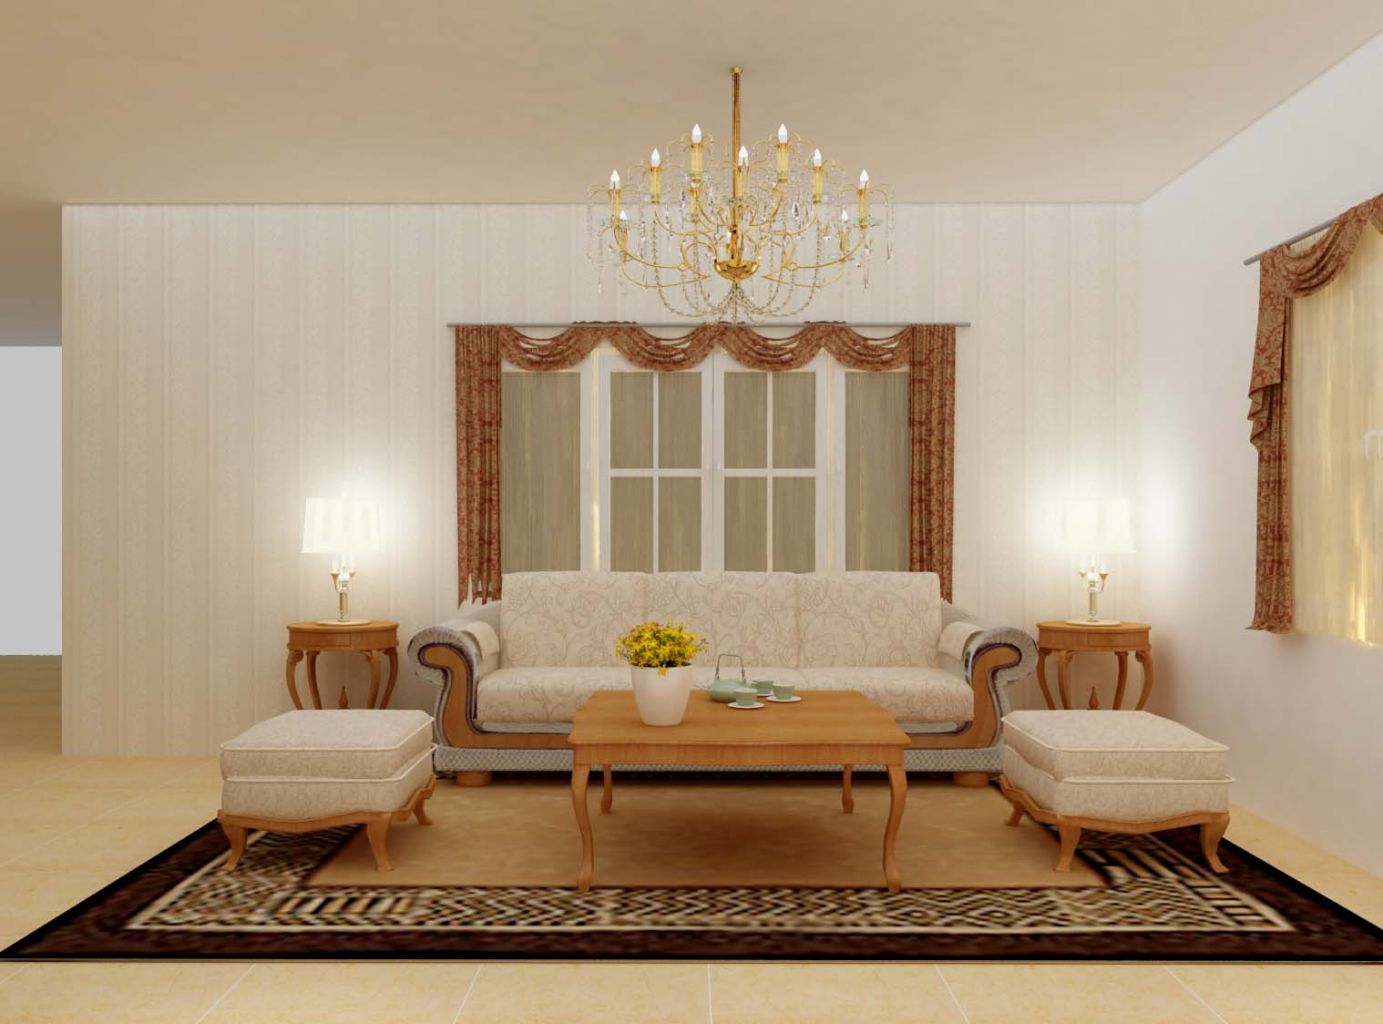 Sofa gỗ Sồi bọc nệm kiểu tân cổ điển Pháp